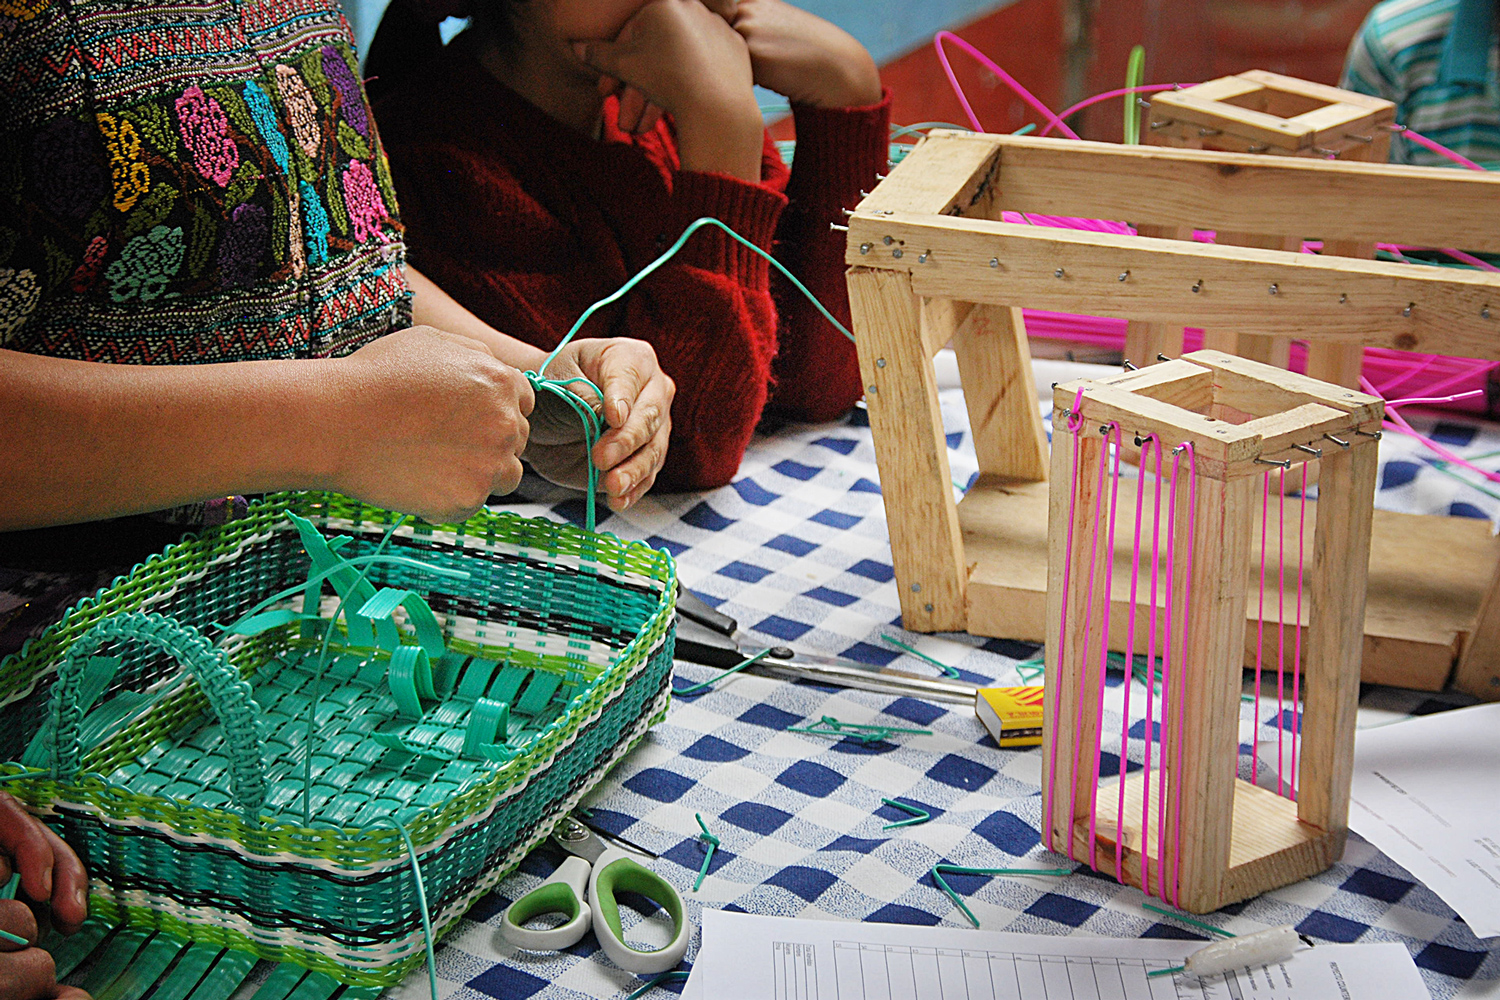 Artisan of the Asdir Association working on the elaboration of baskets with PVC thread